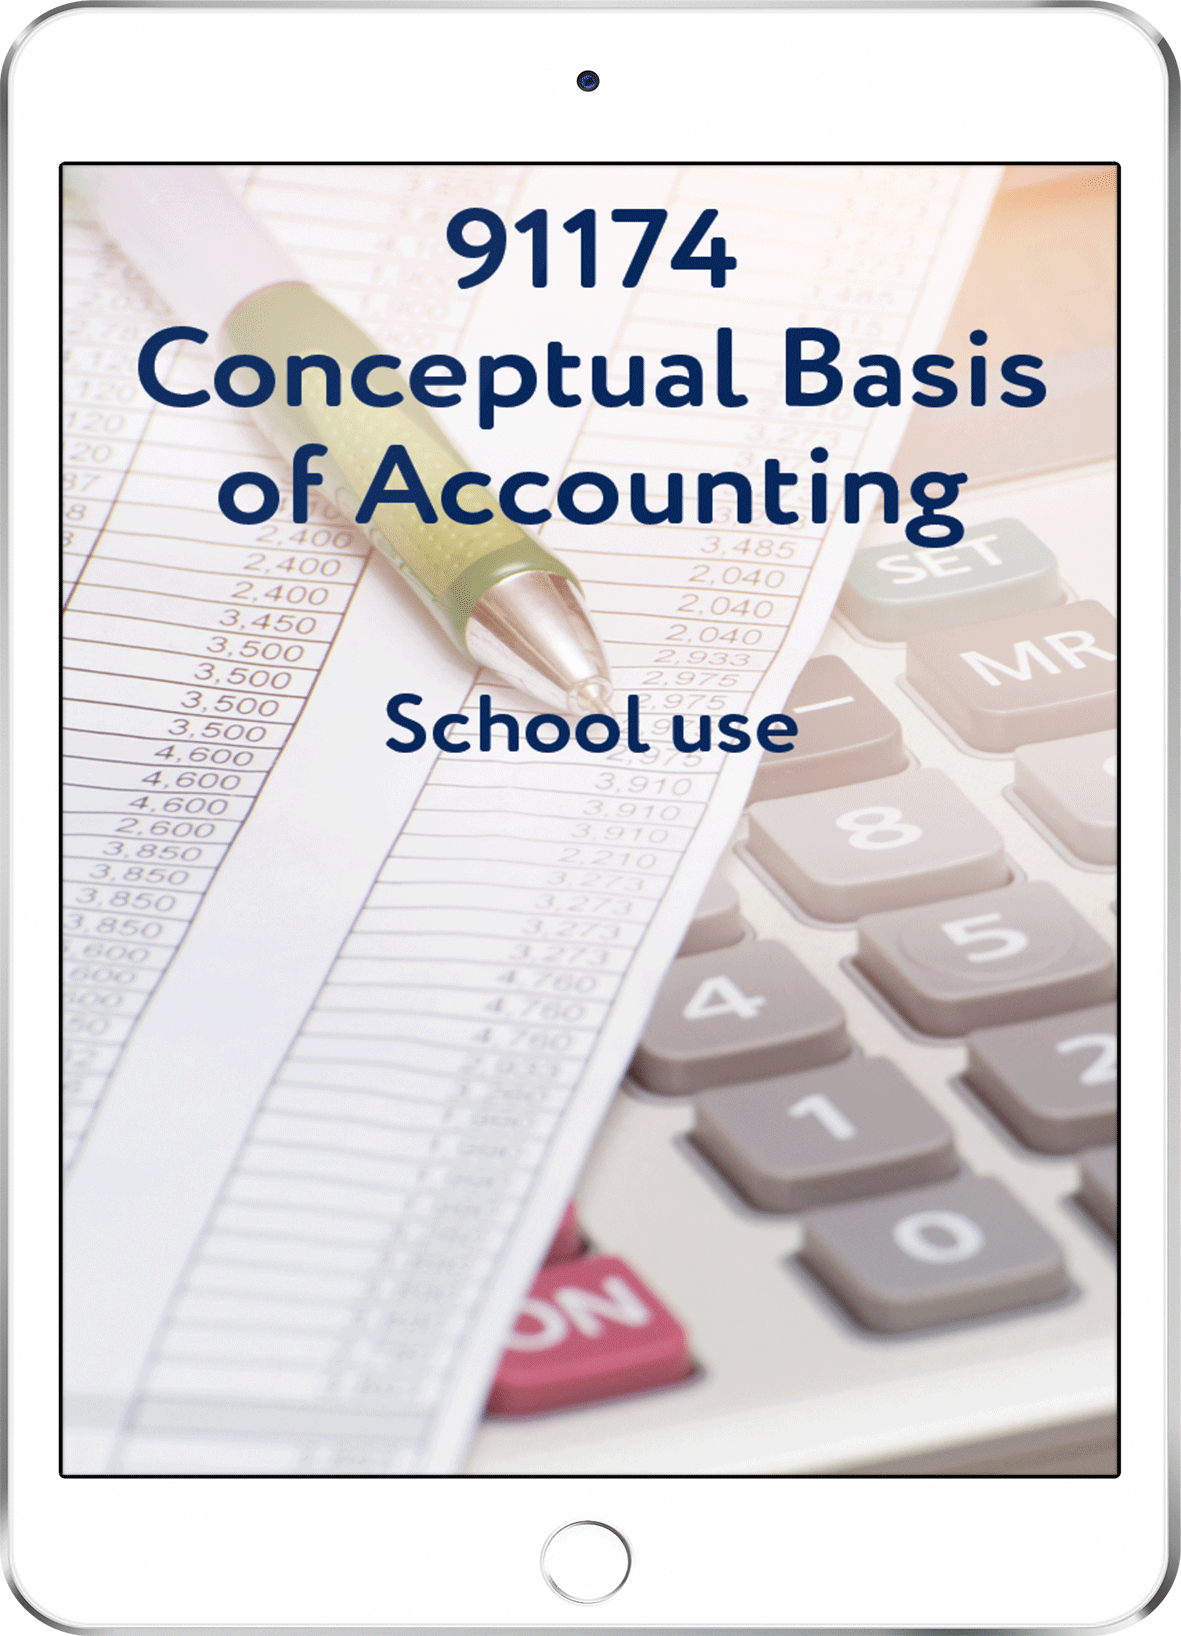 91174 Conceptual Basis of Accounting - School Use